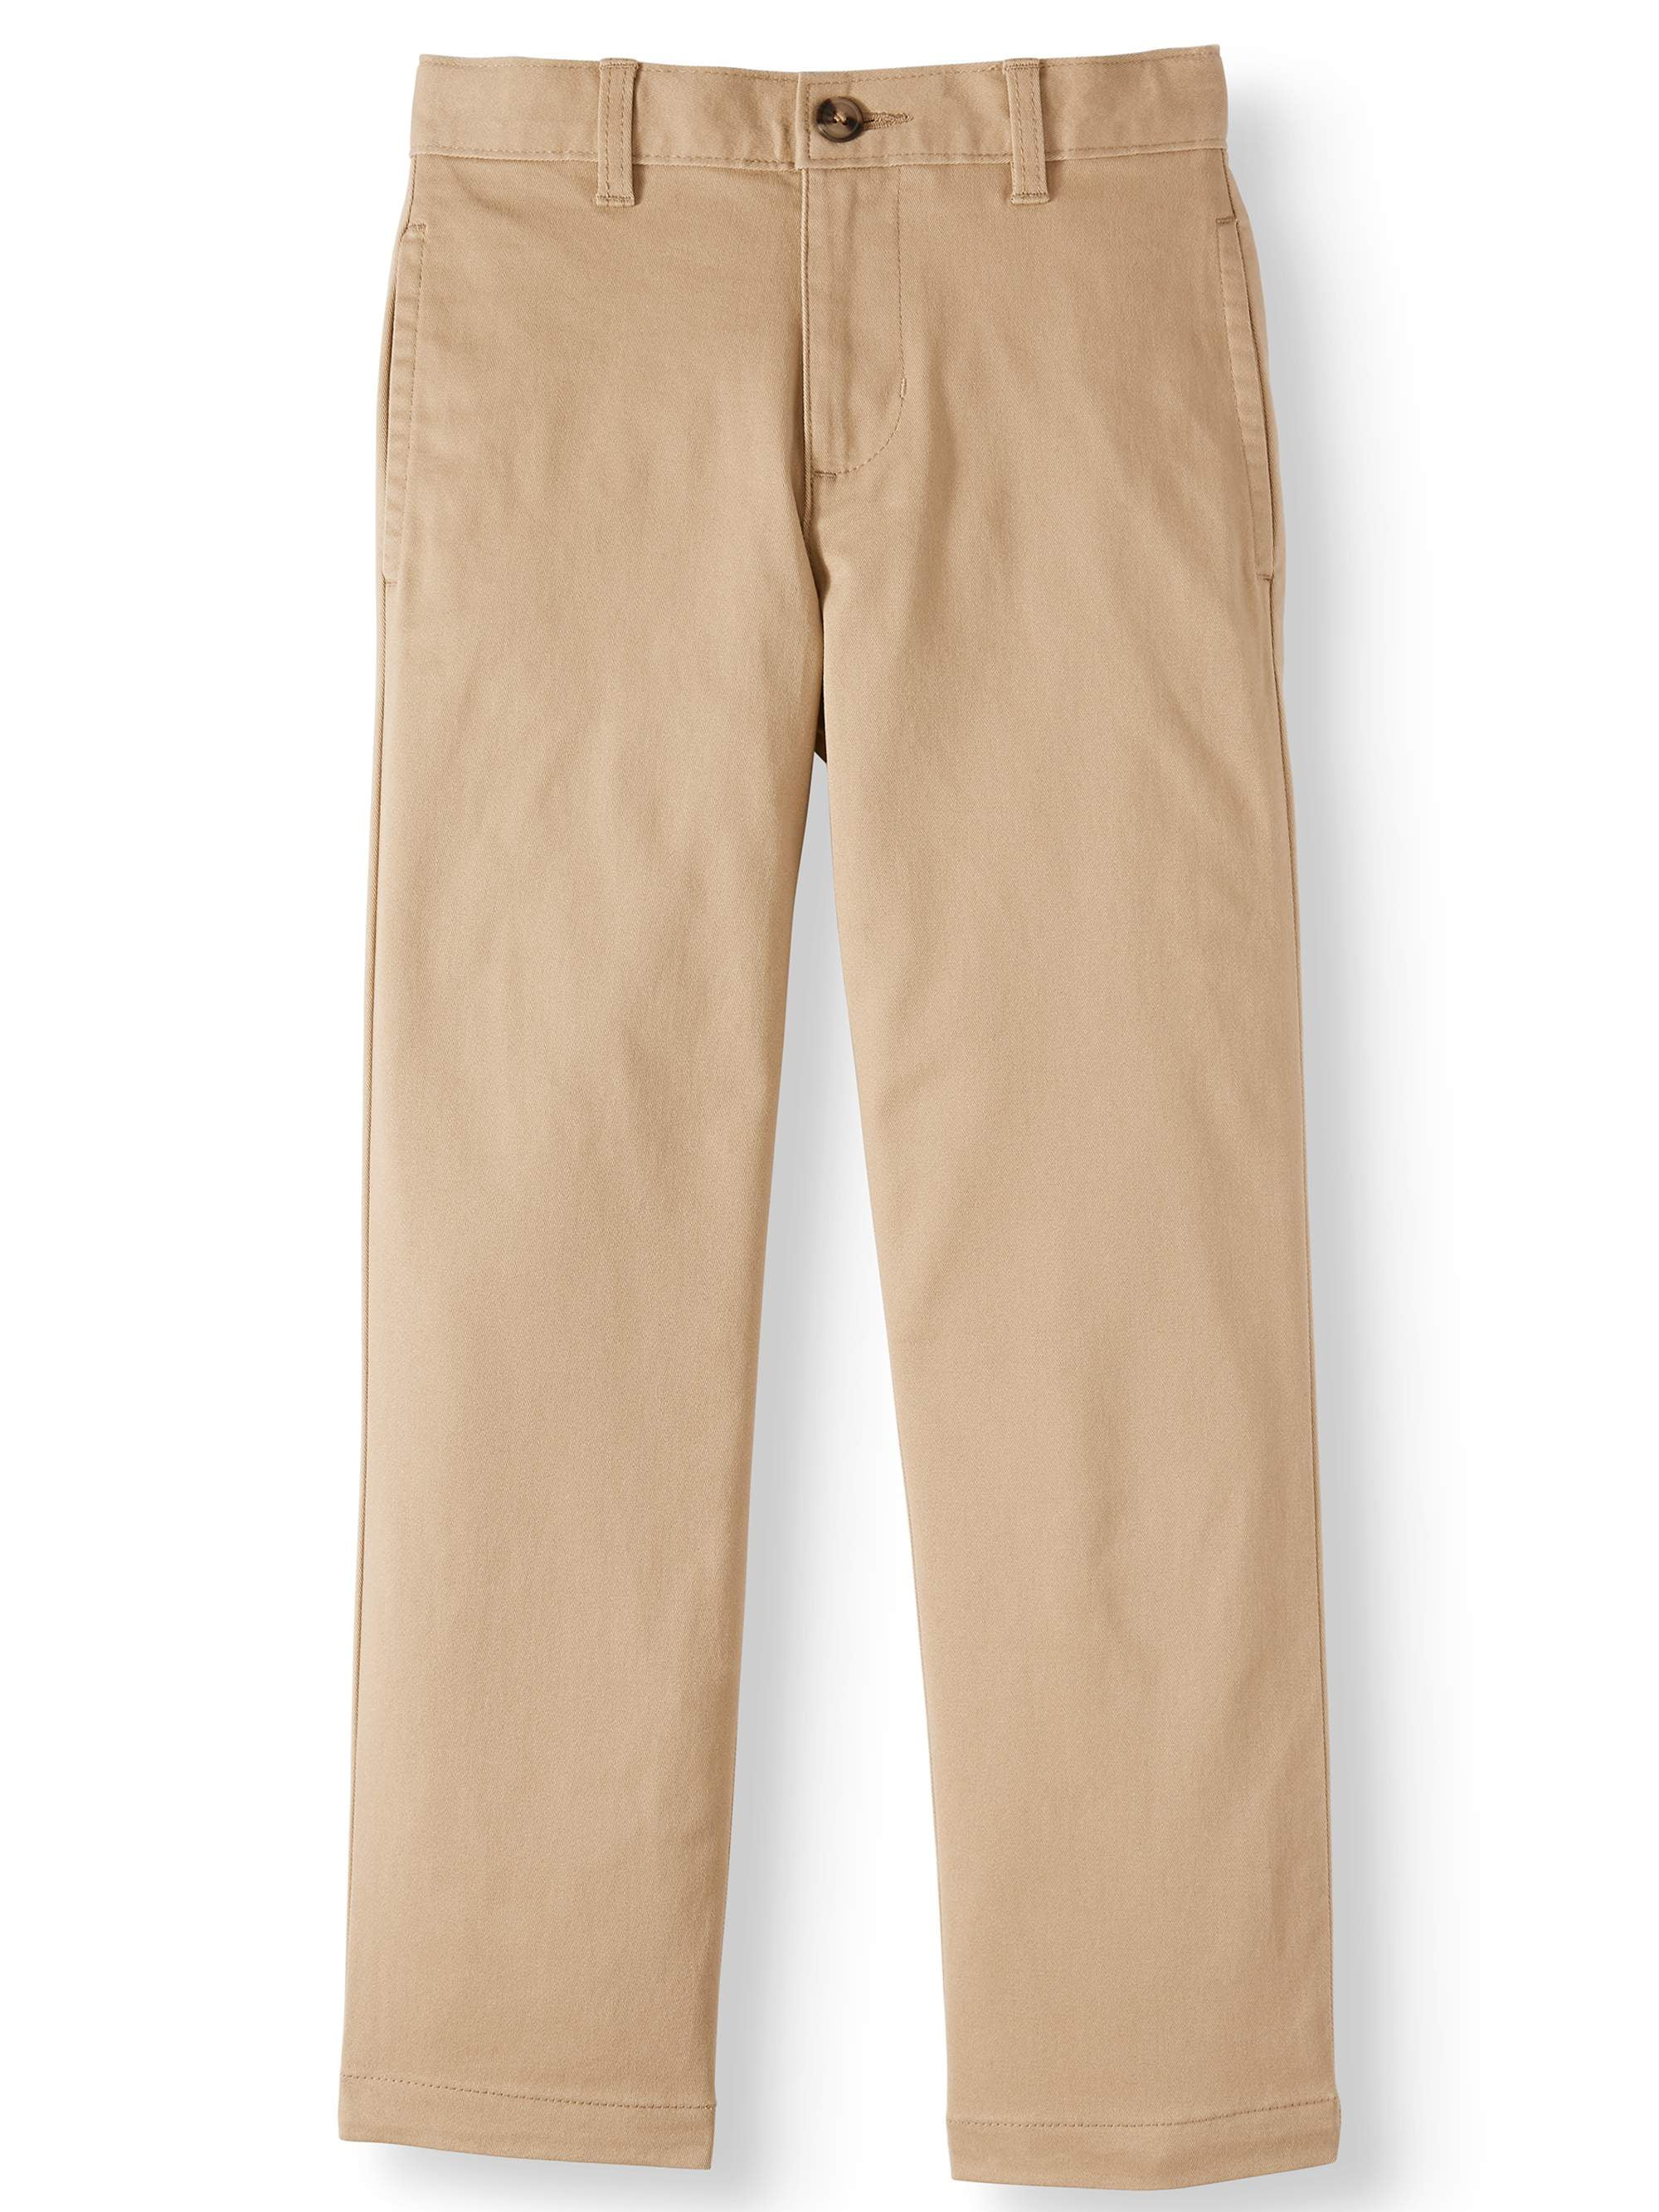 5036 VL Flat Front Pants Boys NV Navy - The Uniform Store